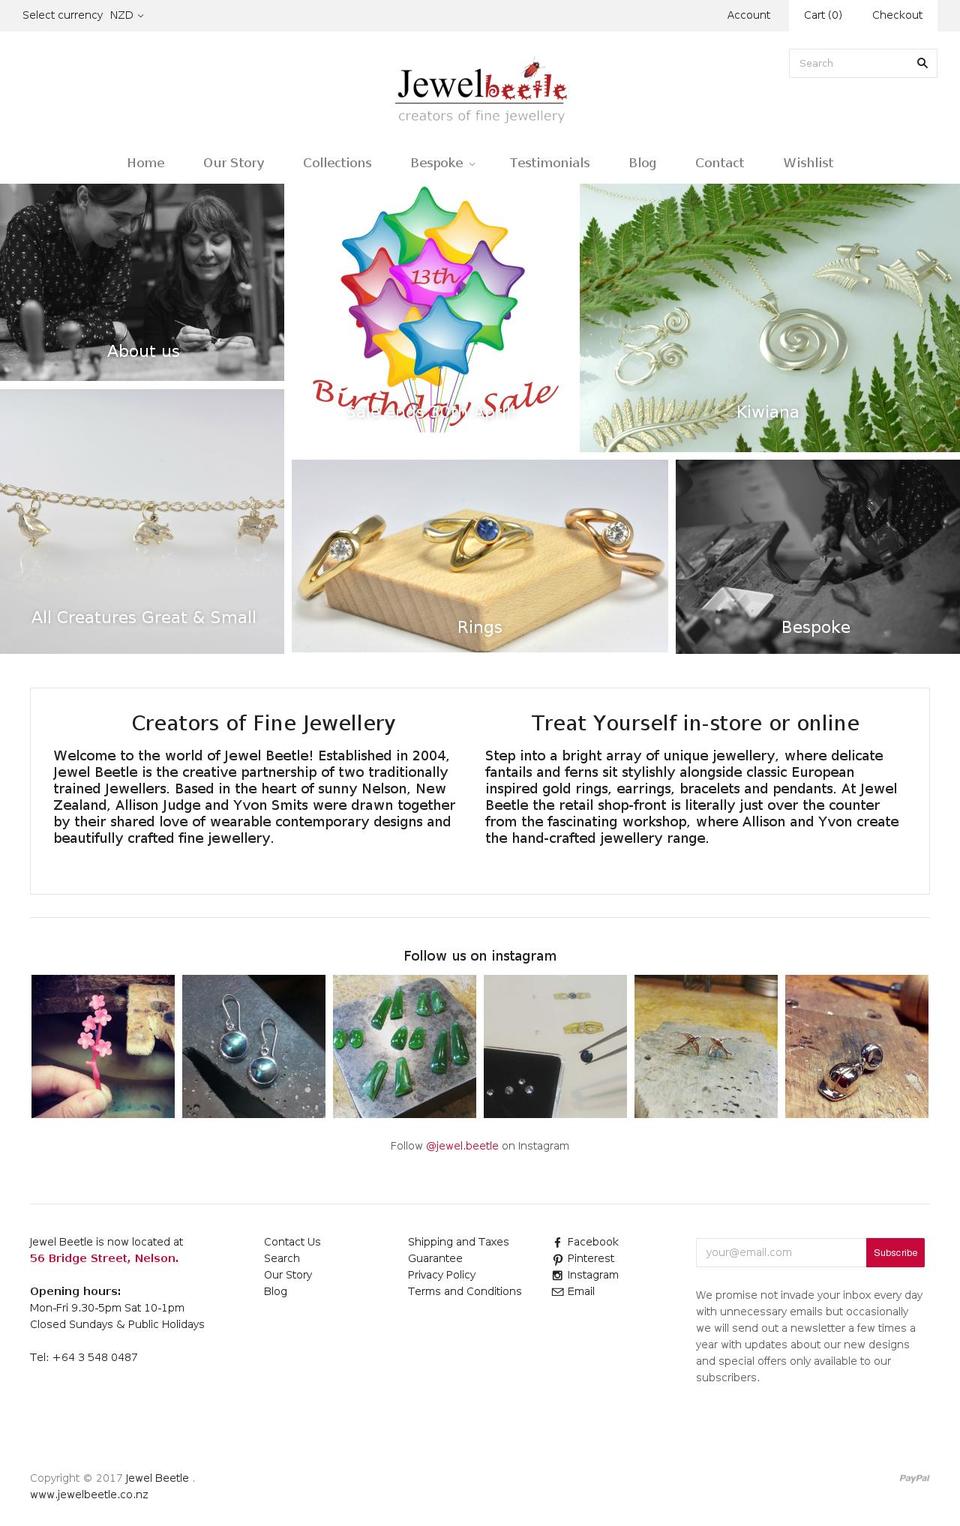 jewelbeetle.co.nz shopify website screenshot